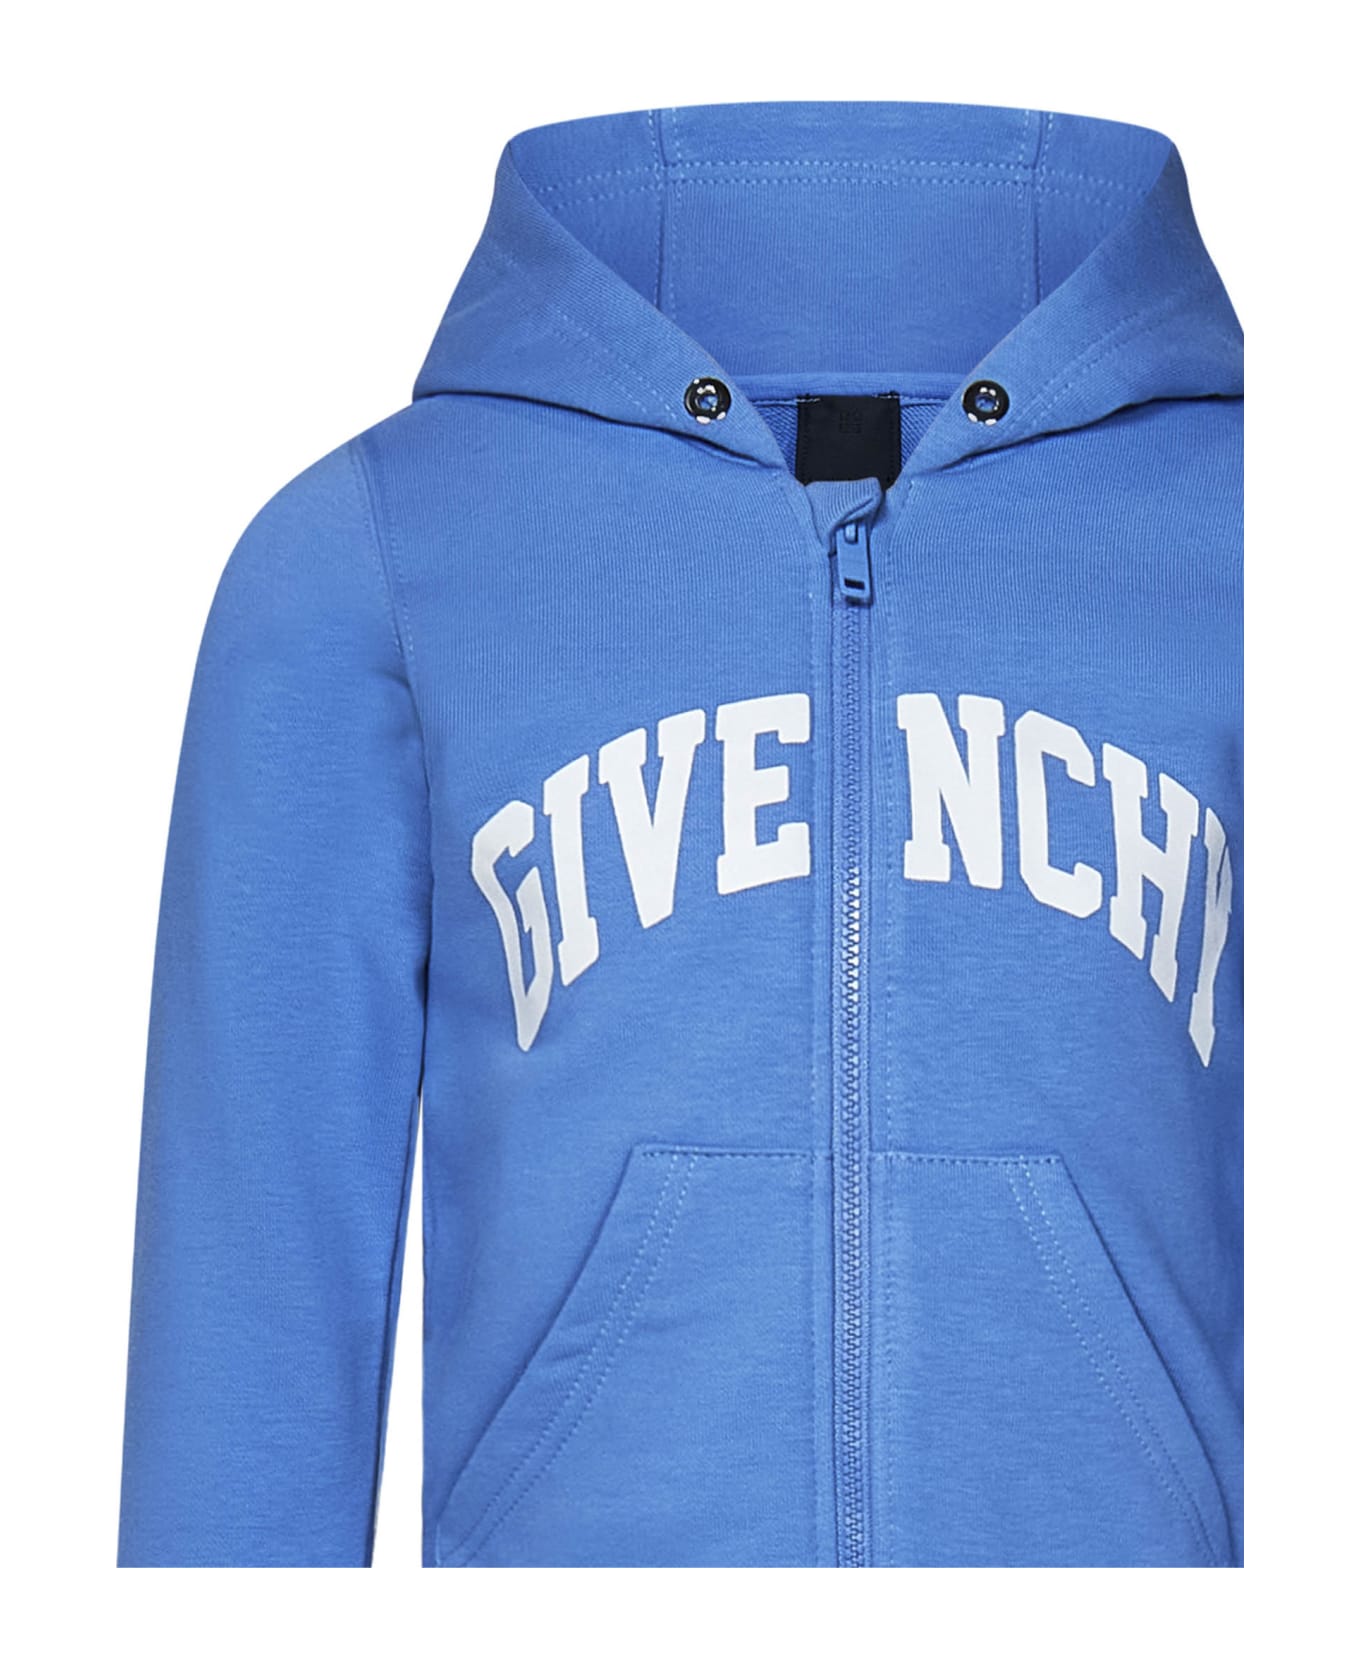 Givenchy Sweatshirt - Light blue